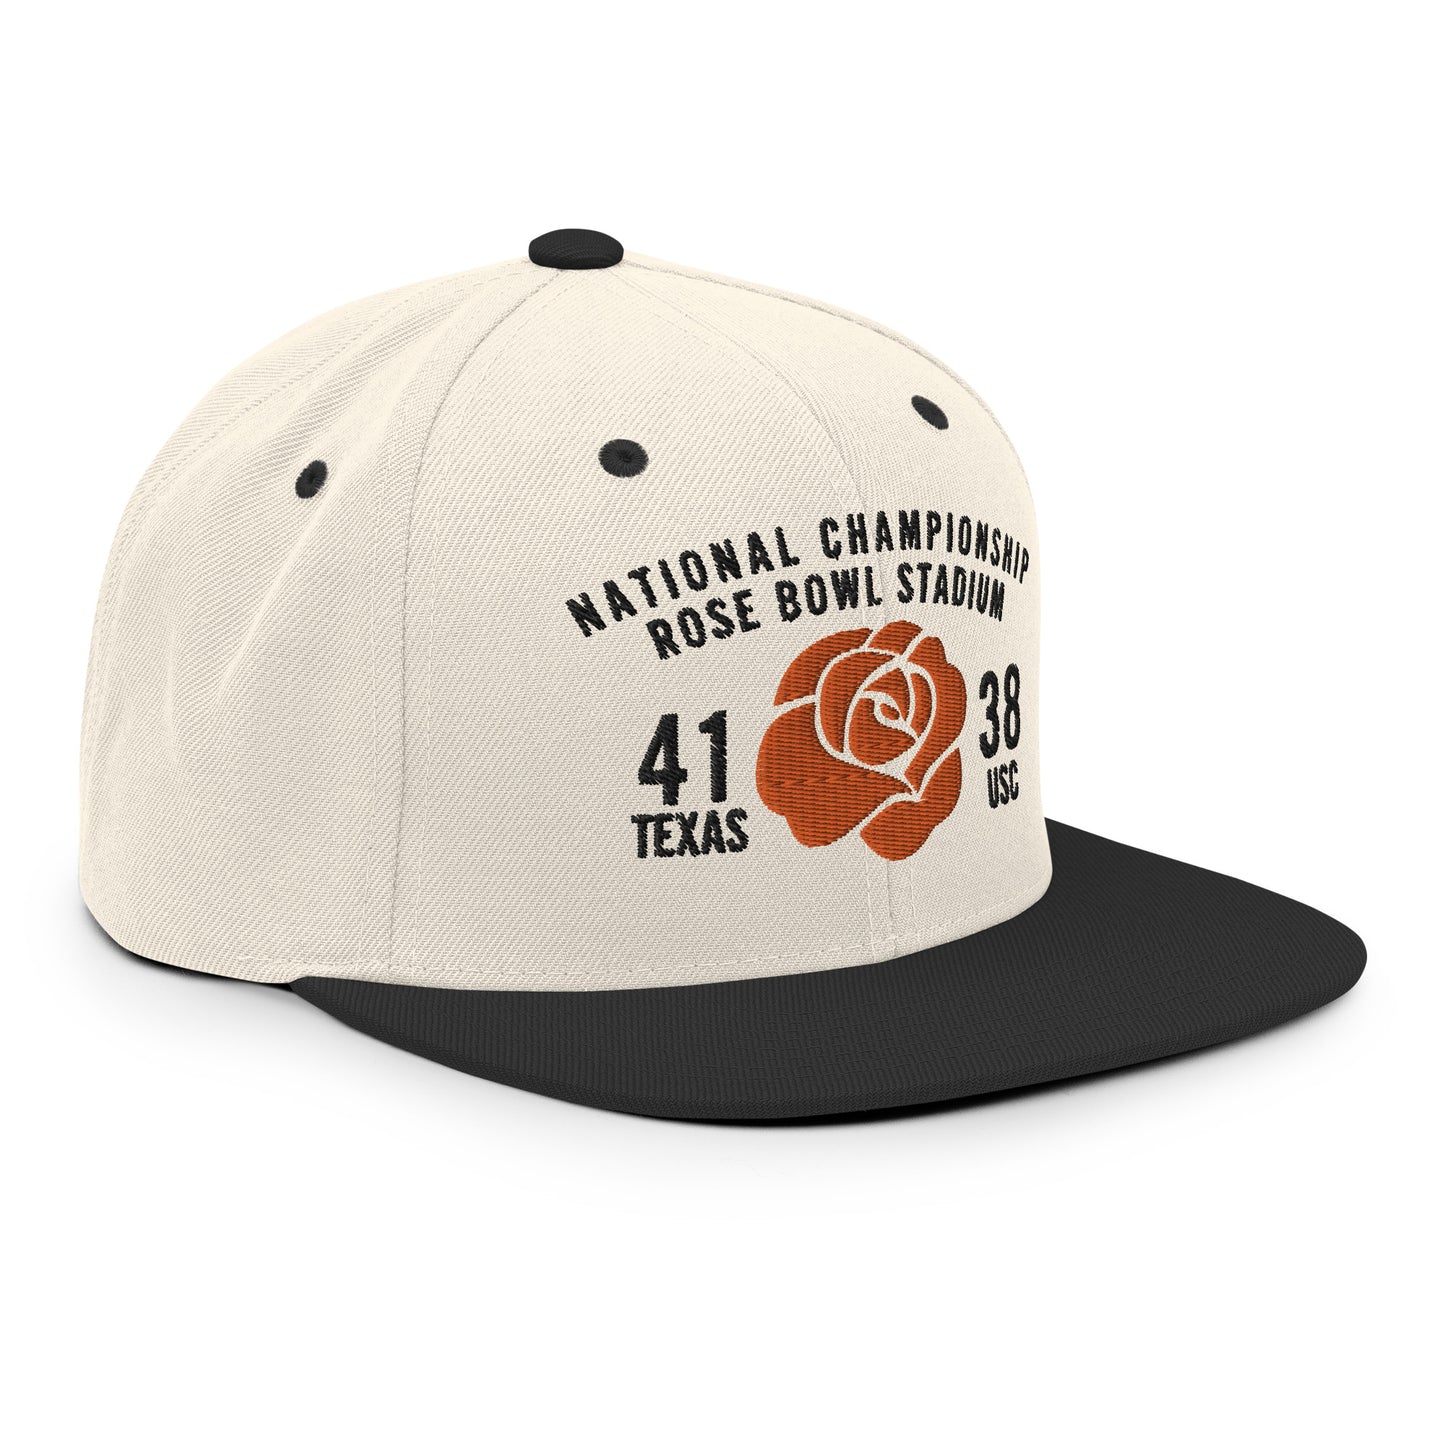 Texas Longhorns 2006 Rose Bowl Hat